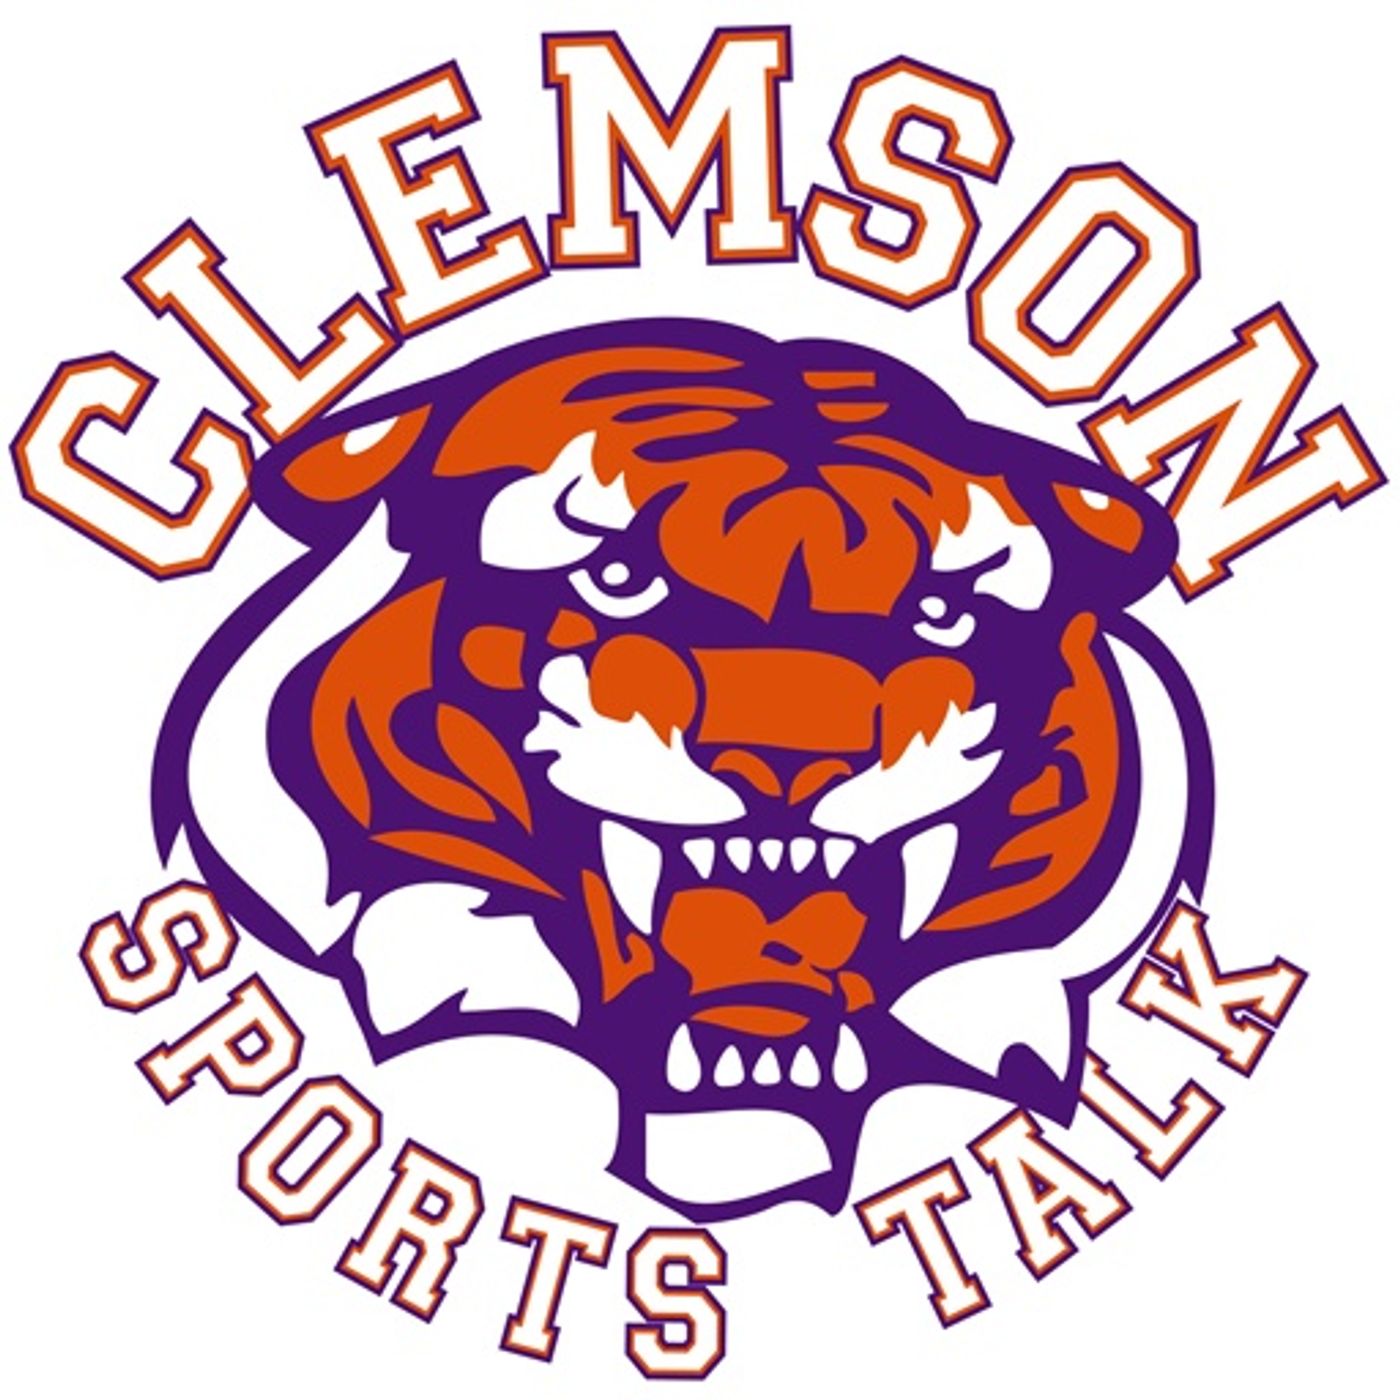 Clemson Sports Talk - Daily News Brief